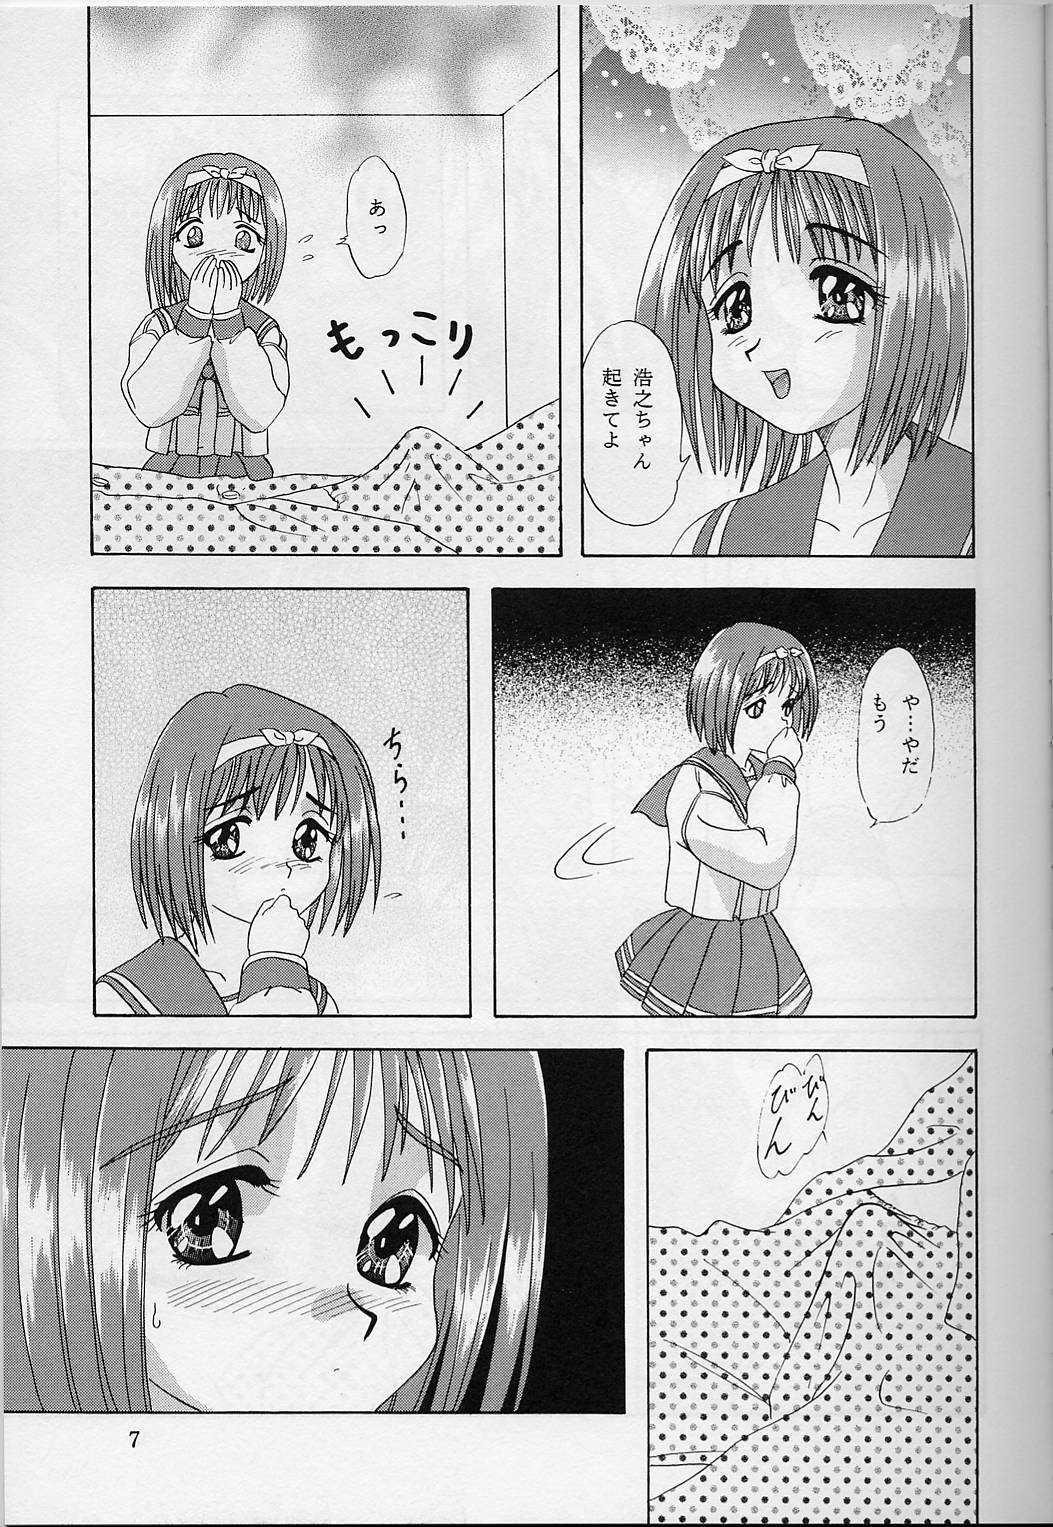 Gostoso Lunch Box 33 - Happa no Shizuku - To heart Brunettes - Page 6